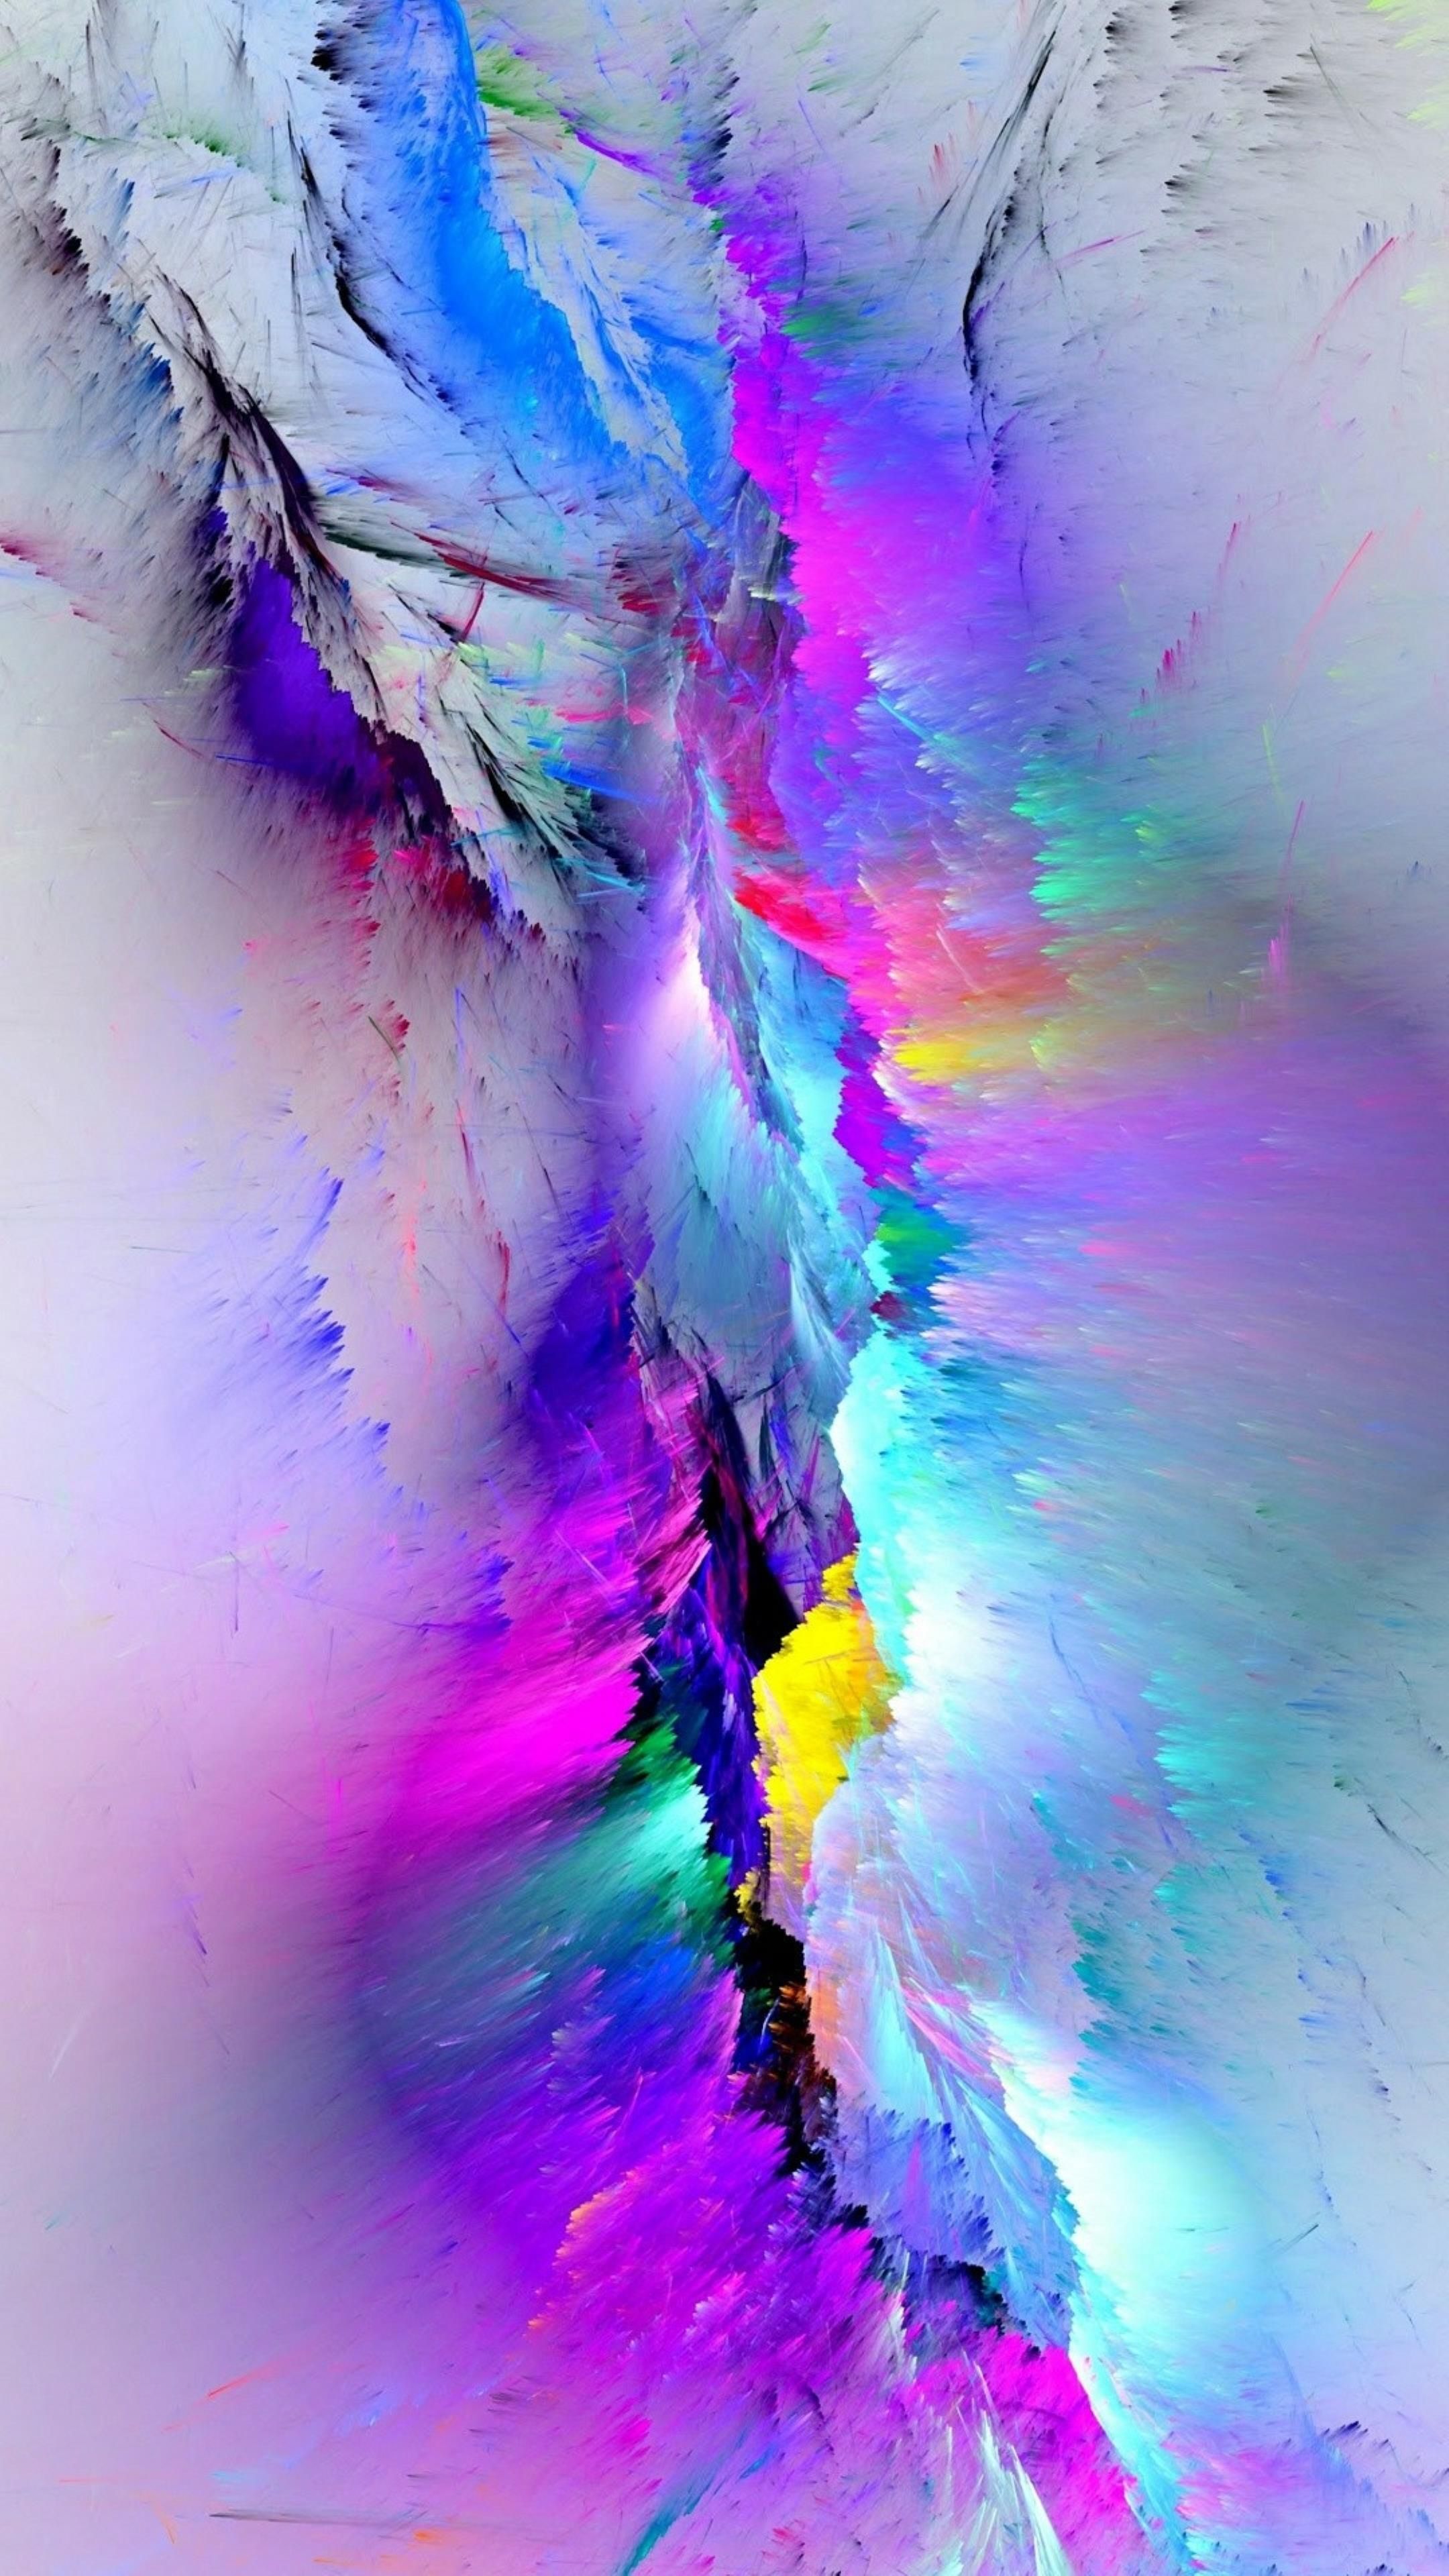 Abstract 4K Wallpaper 35. Motion wallpaper, Rainbow wallpaper, Colorful wallpaper